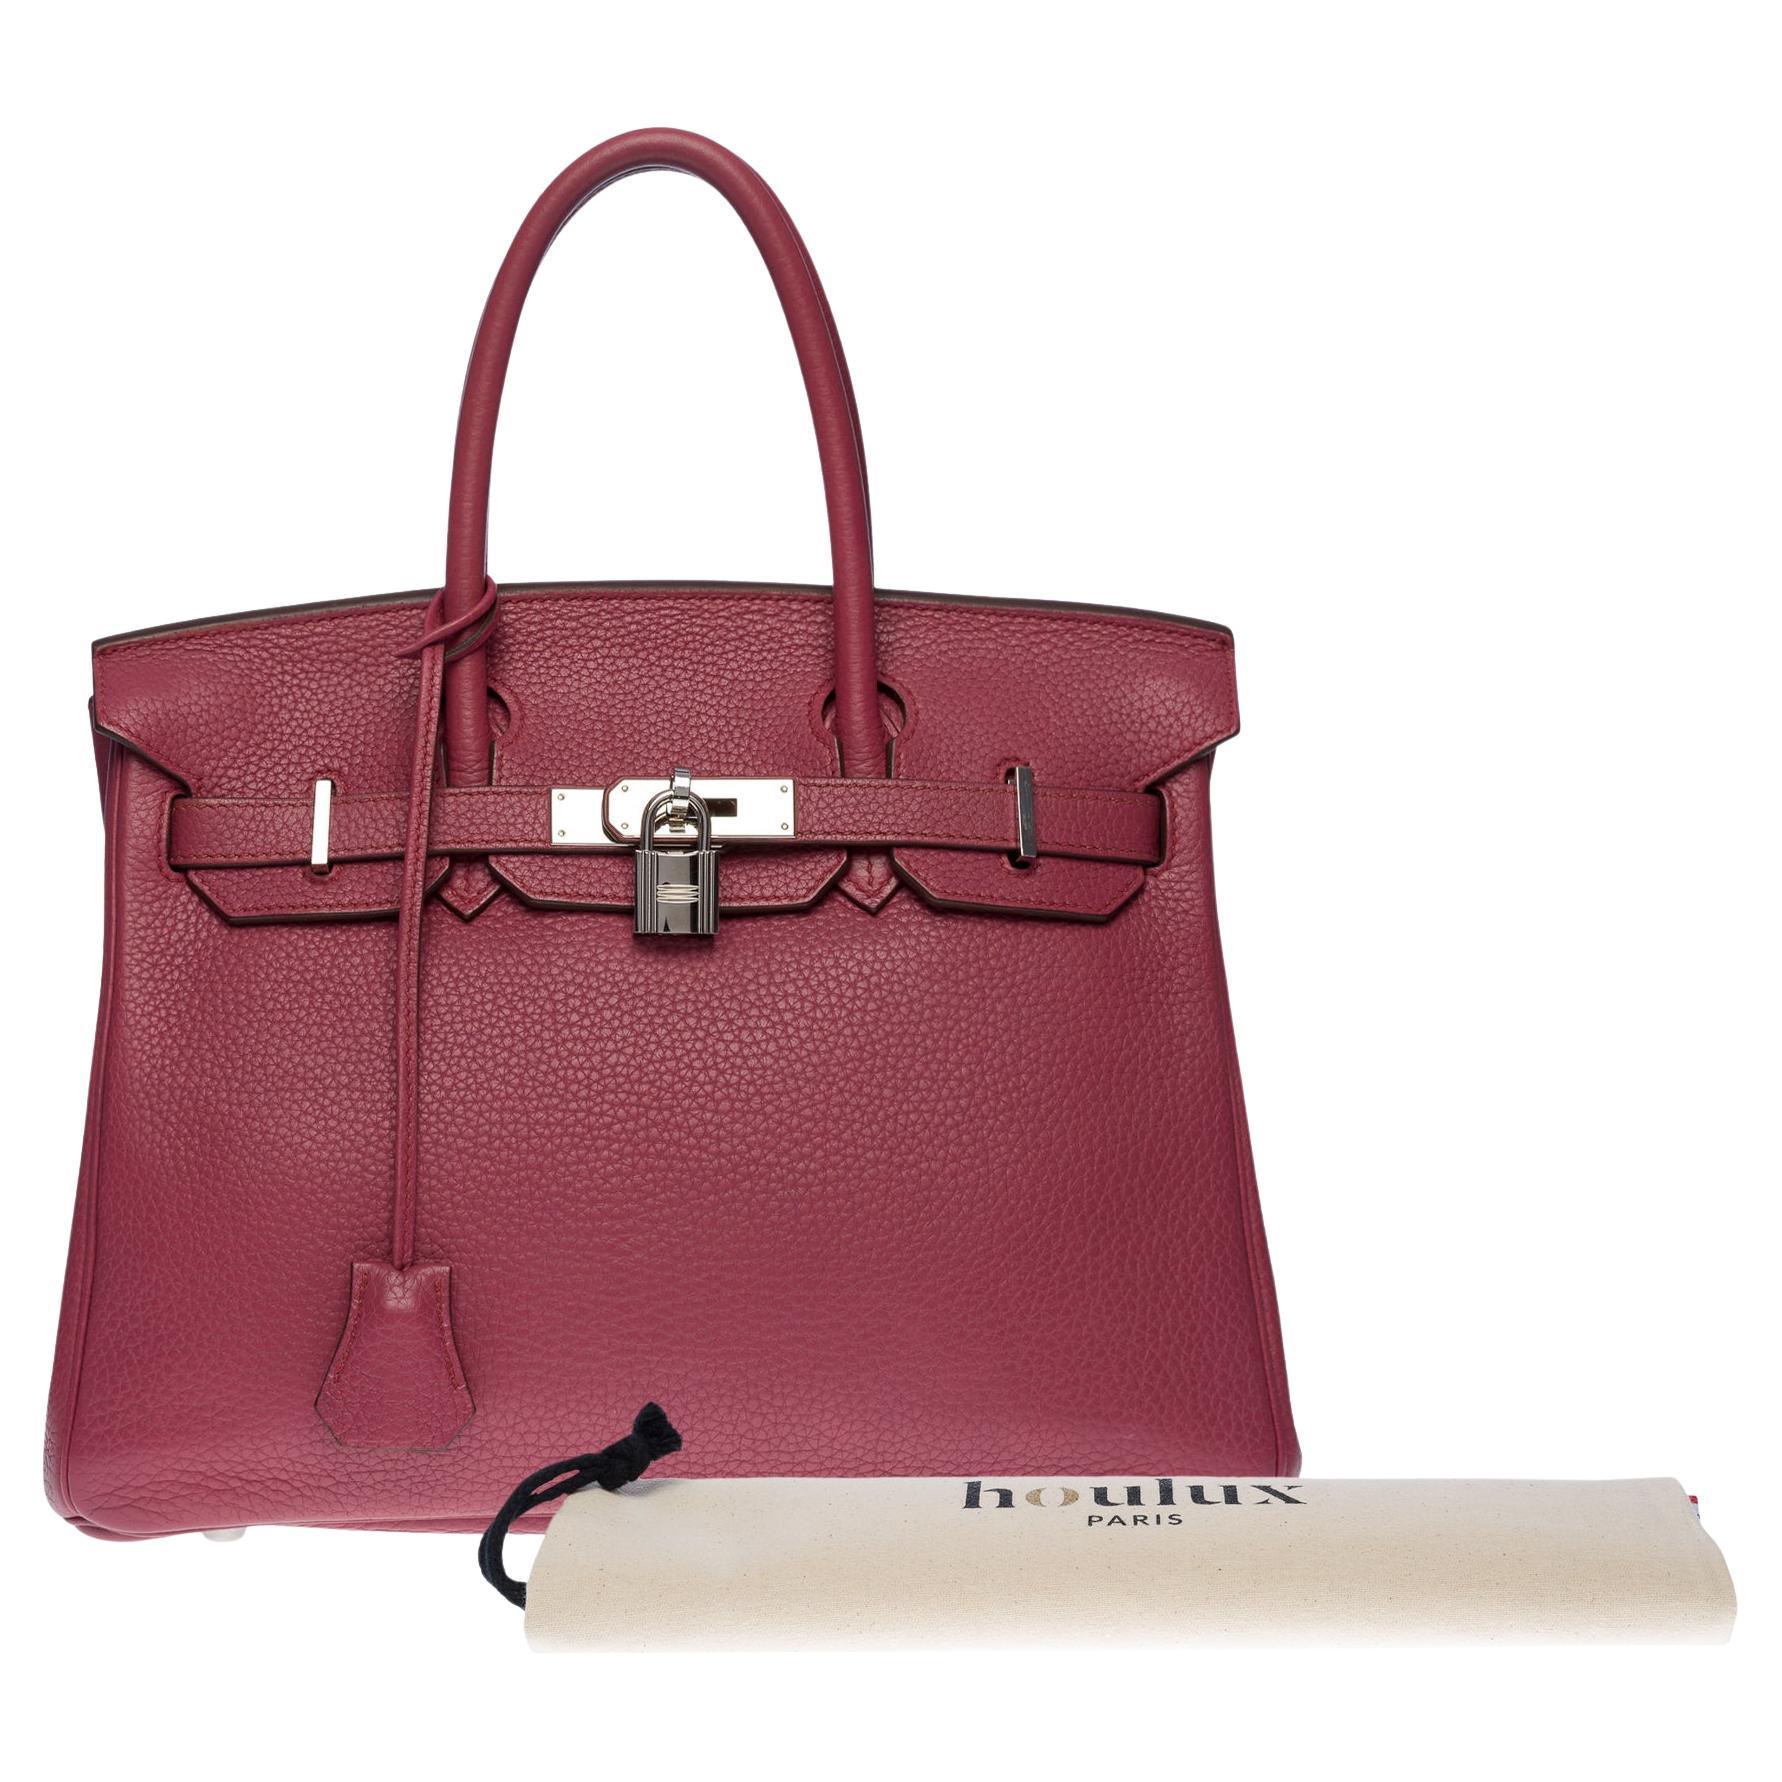 Amazing Hermès Birkin 30 handbag in Bois de rose Togo leather, SHW For Sale